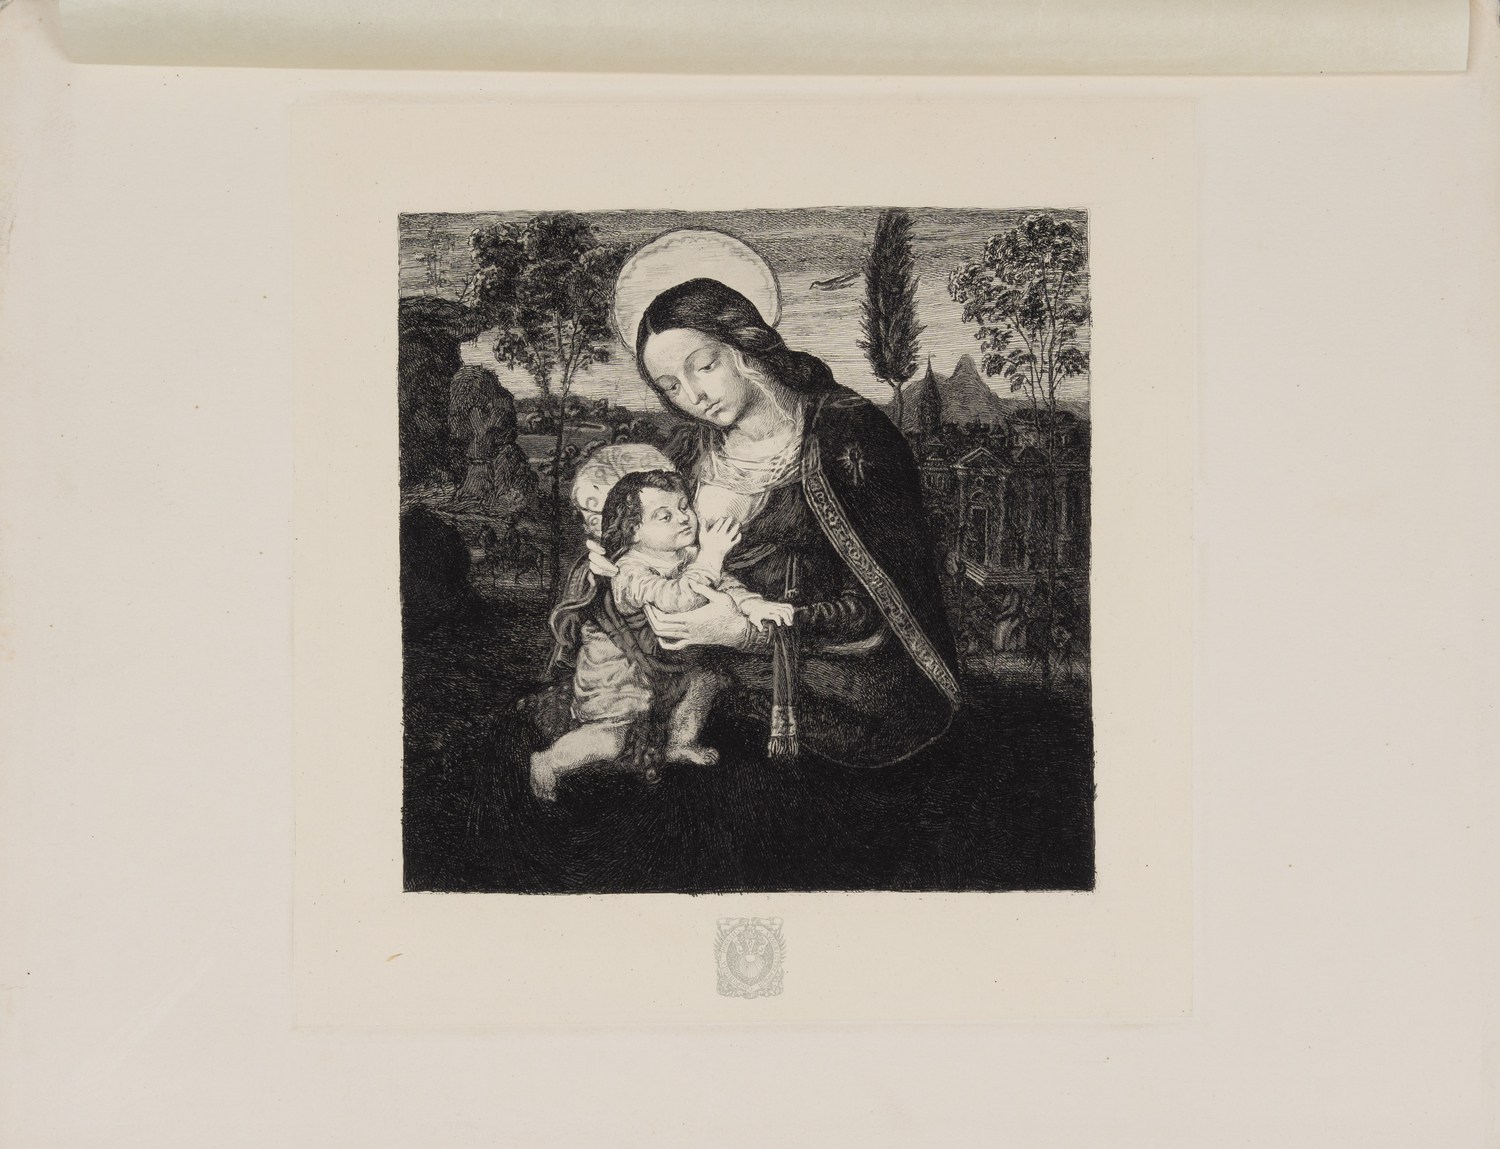 Гравюра по картине Бернардино Ди Бетто Ди Биаджи (Пинутриккьо). Мадона с младенцем. 1907.